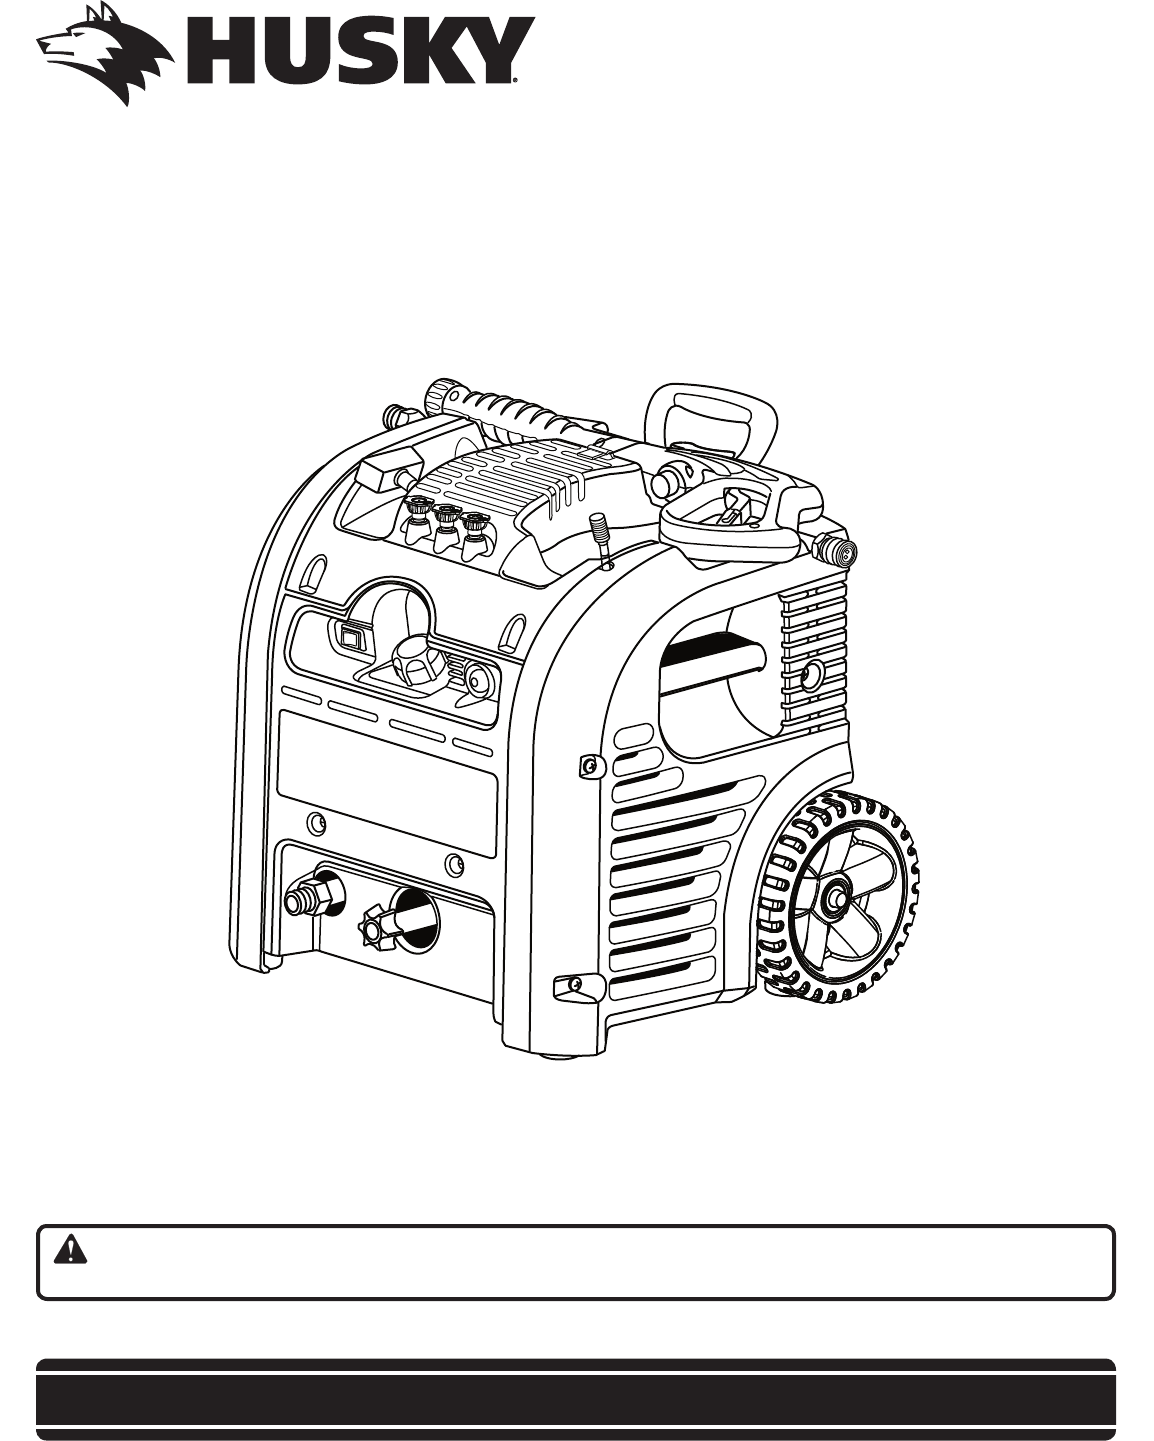 Husky Pressure Washer HU80522 User Guide | ManualsOnline.com